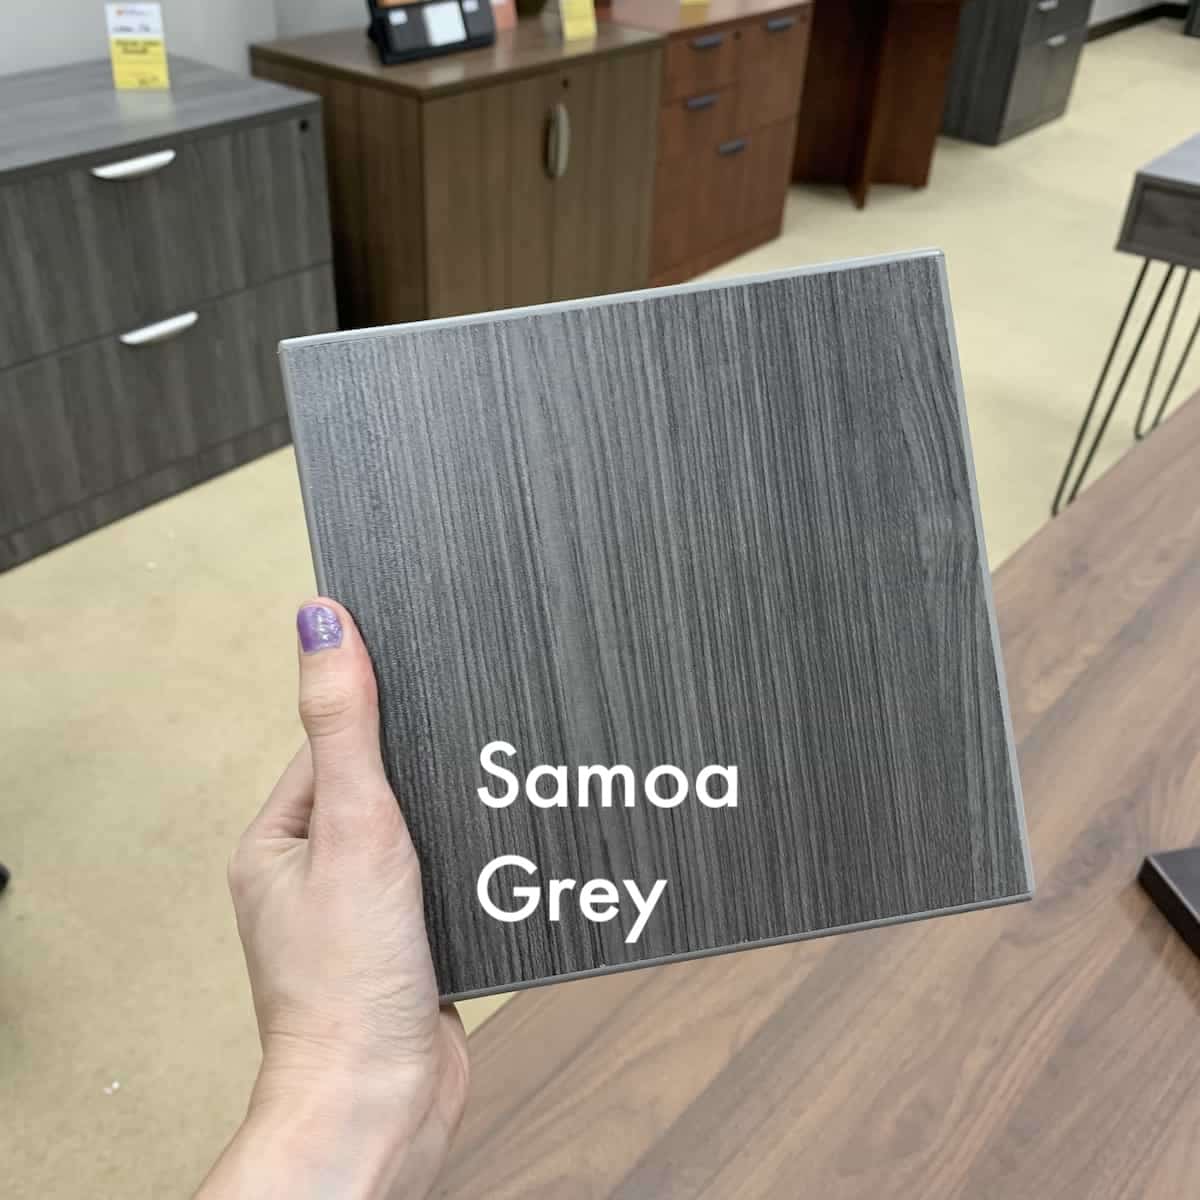 samoa grey finish color for new laminate